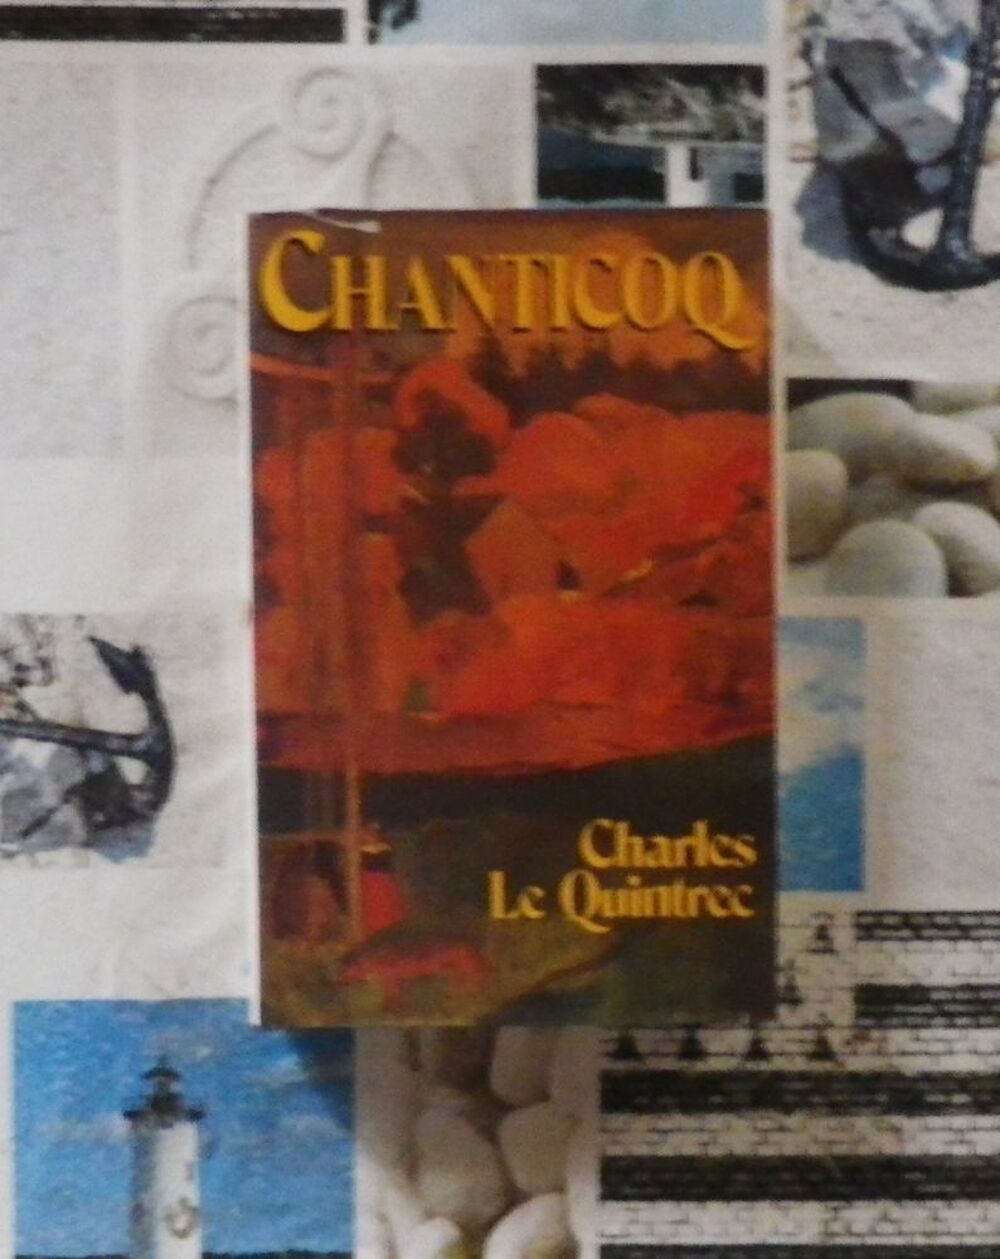 CHANTICOQ de Charles LE QUINTREC Ed. France Loisirs Livres et BD